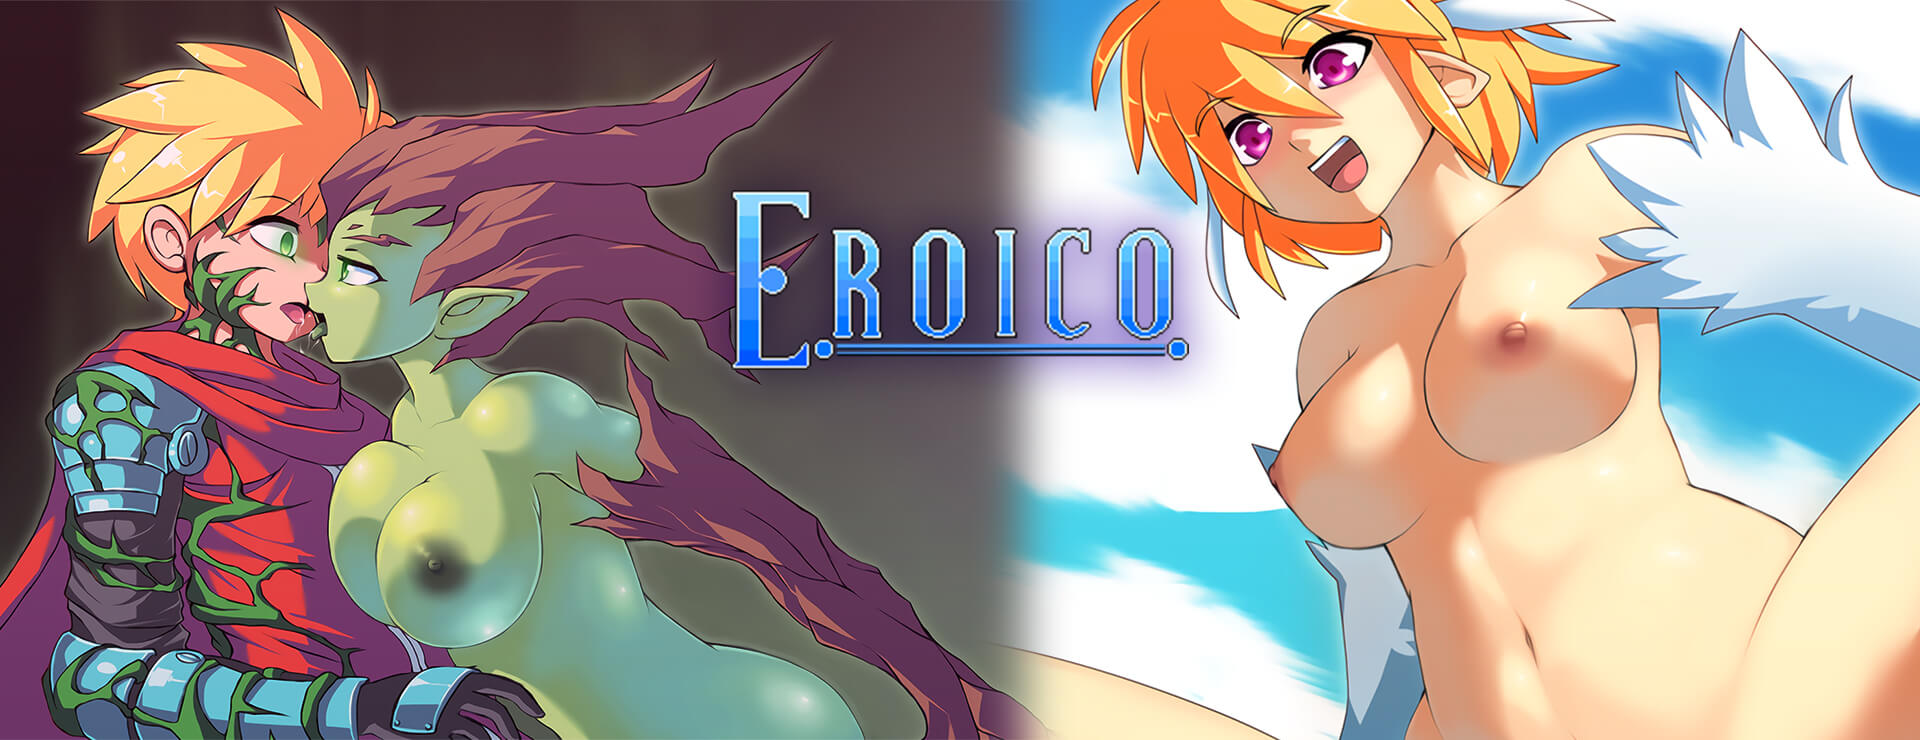 Eroico - アクションアドベンチャー ゲーム